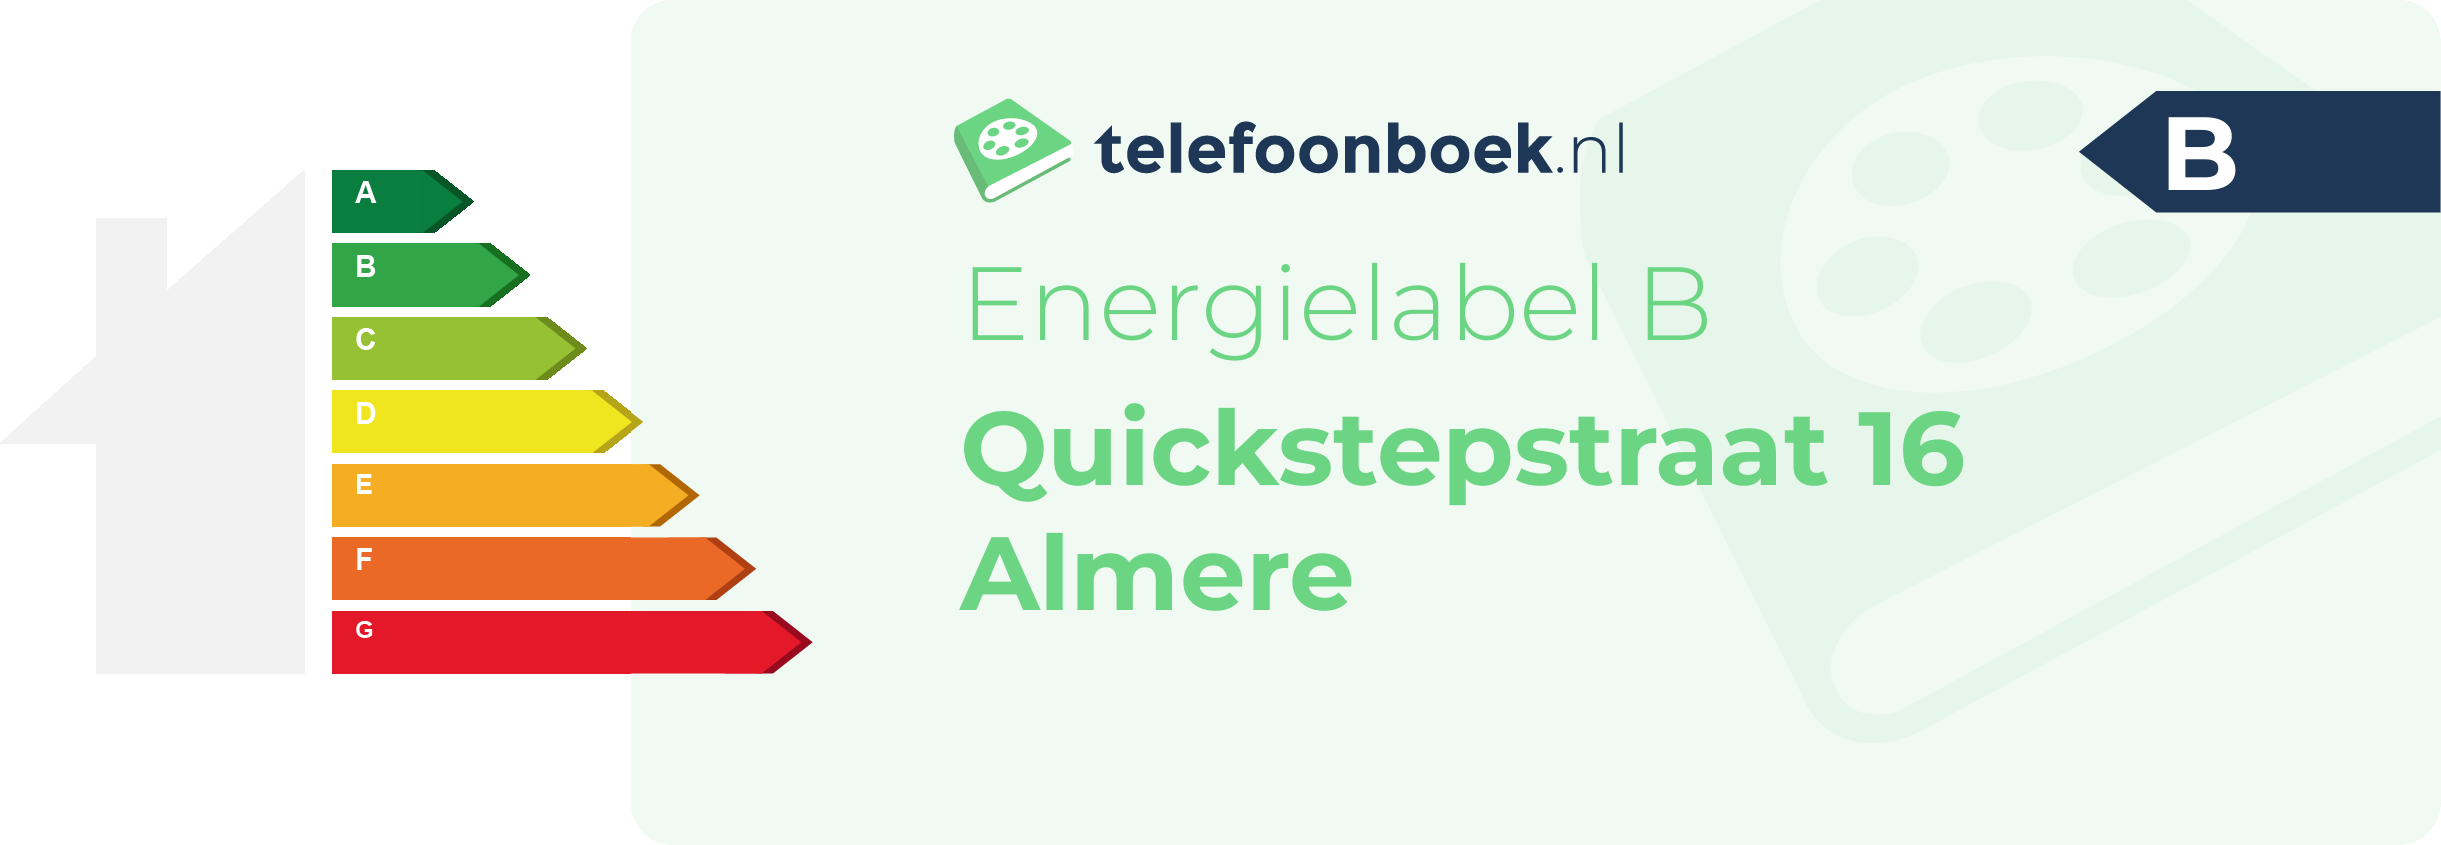 Energielabel Quickstepstraat 16 Almere